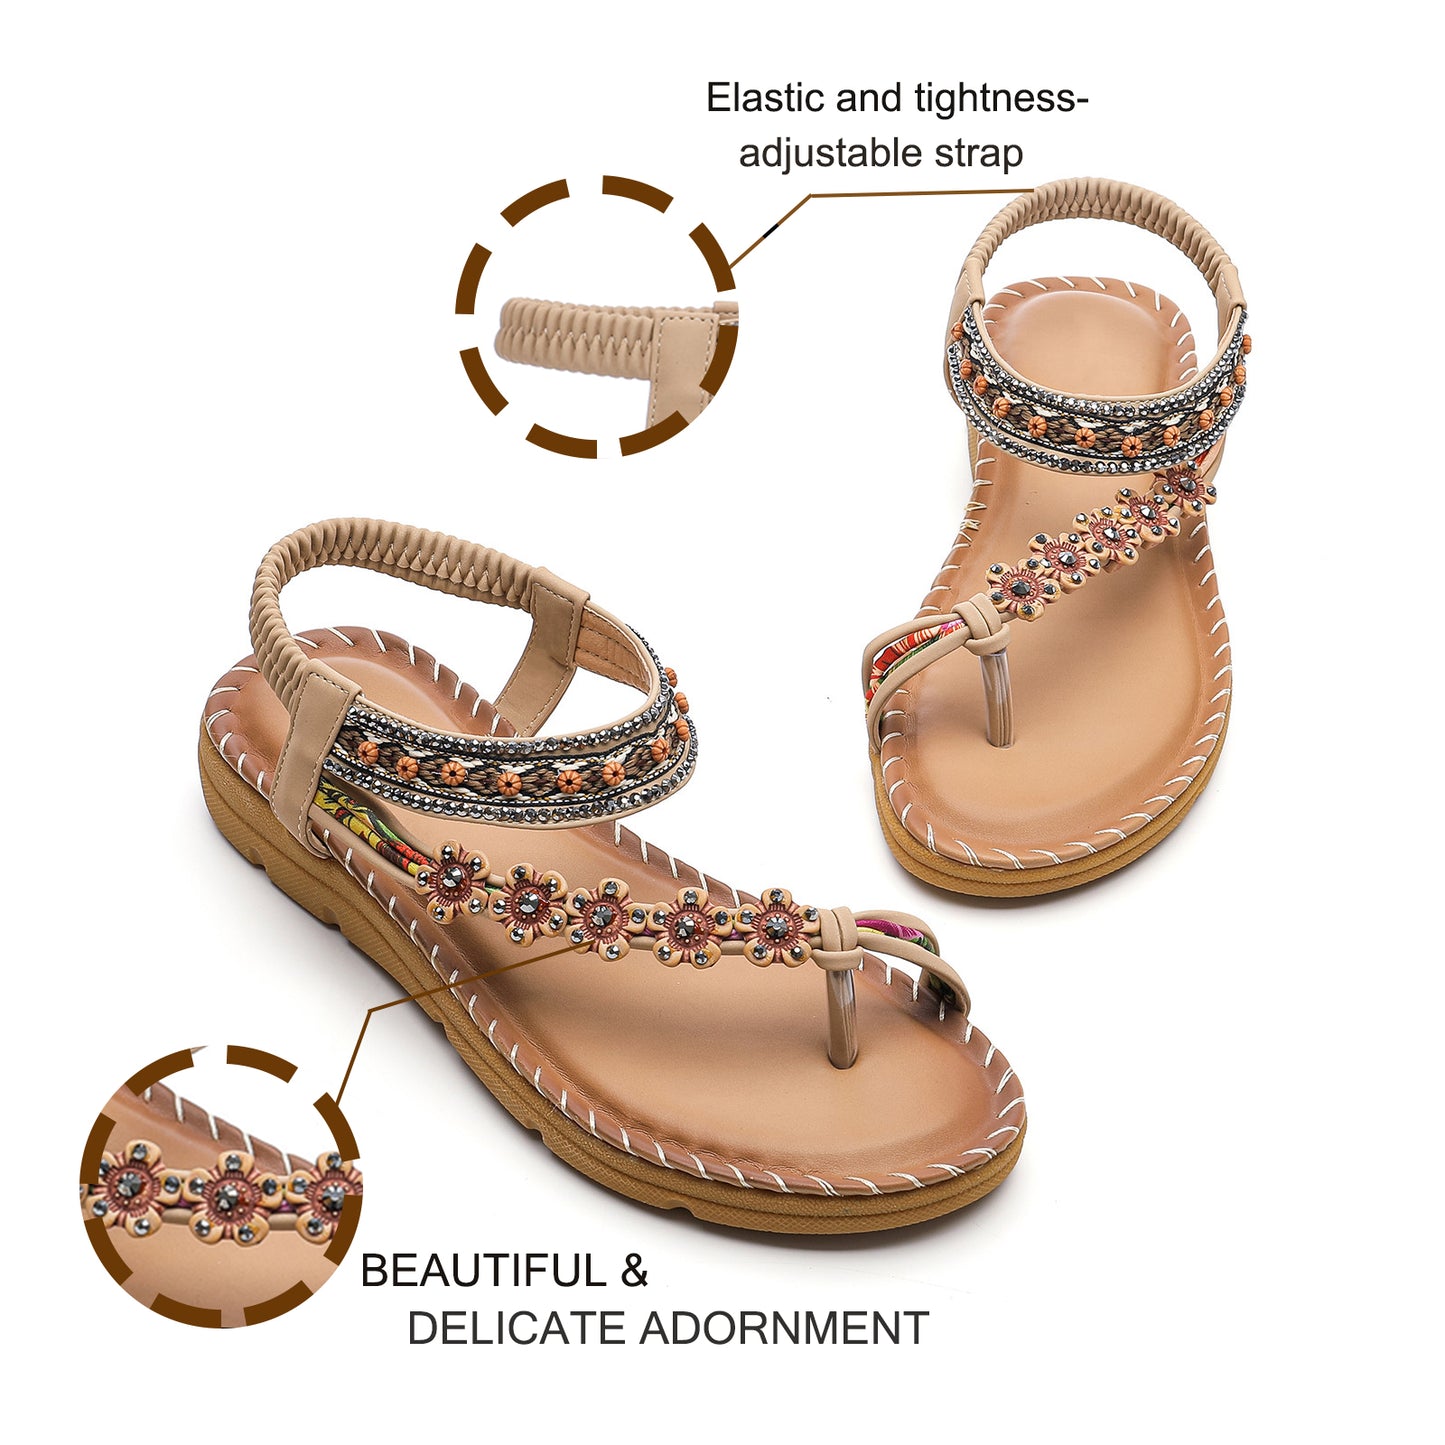 MEMON Womens Flats Sandals Bohemian Summer Elastic Ankle Strap Sandals Flip Flops Beach Shoes